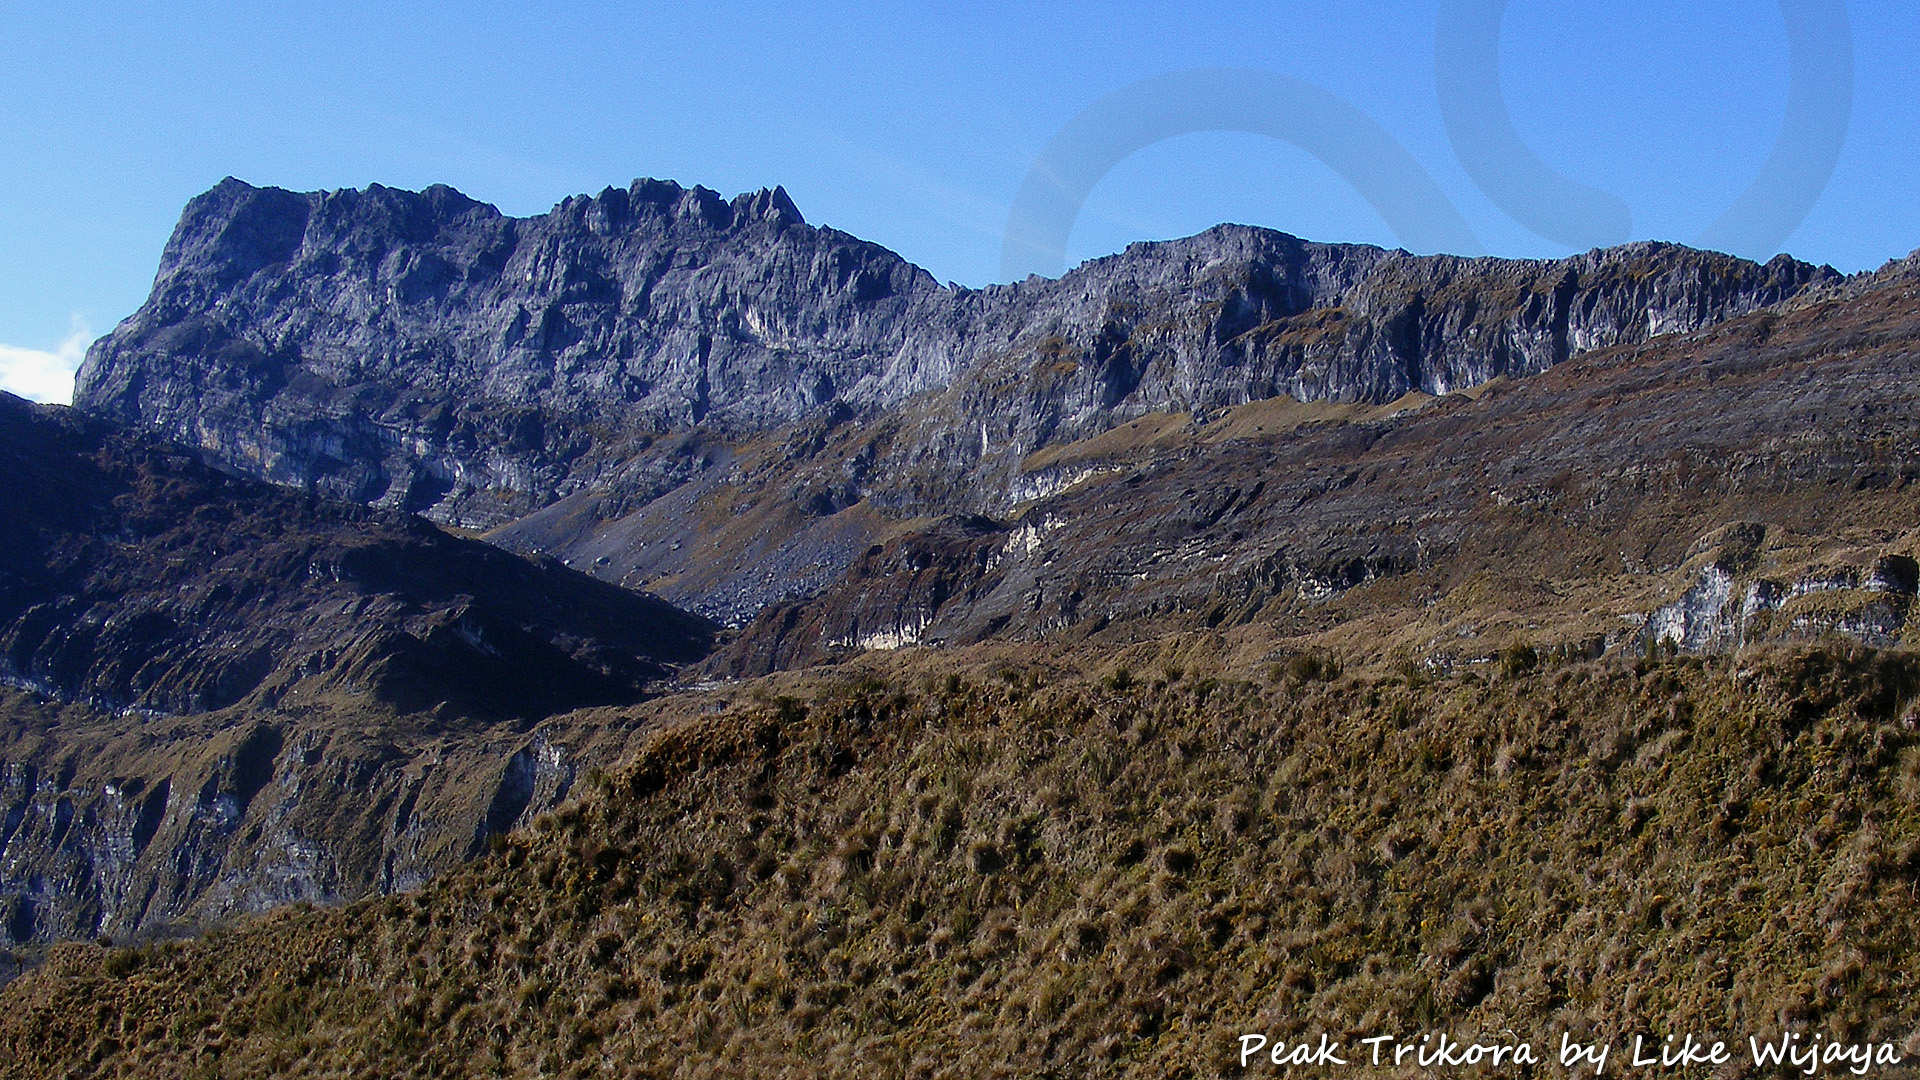 A view on Peak Trikora, formerly known as Wilhelmina, at 4,750 m New Guinea's third highest peak. Copyright © Like Wijaya